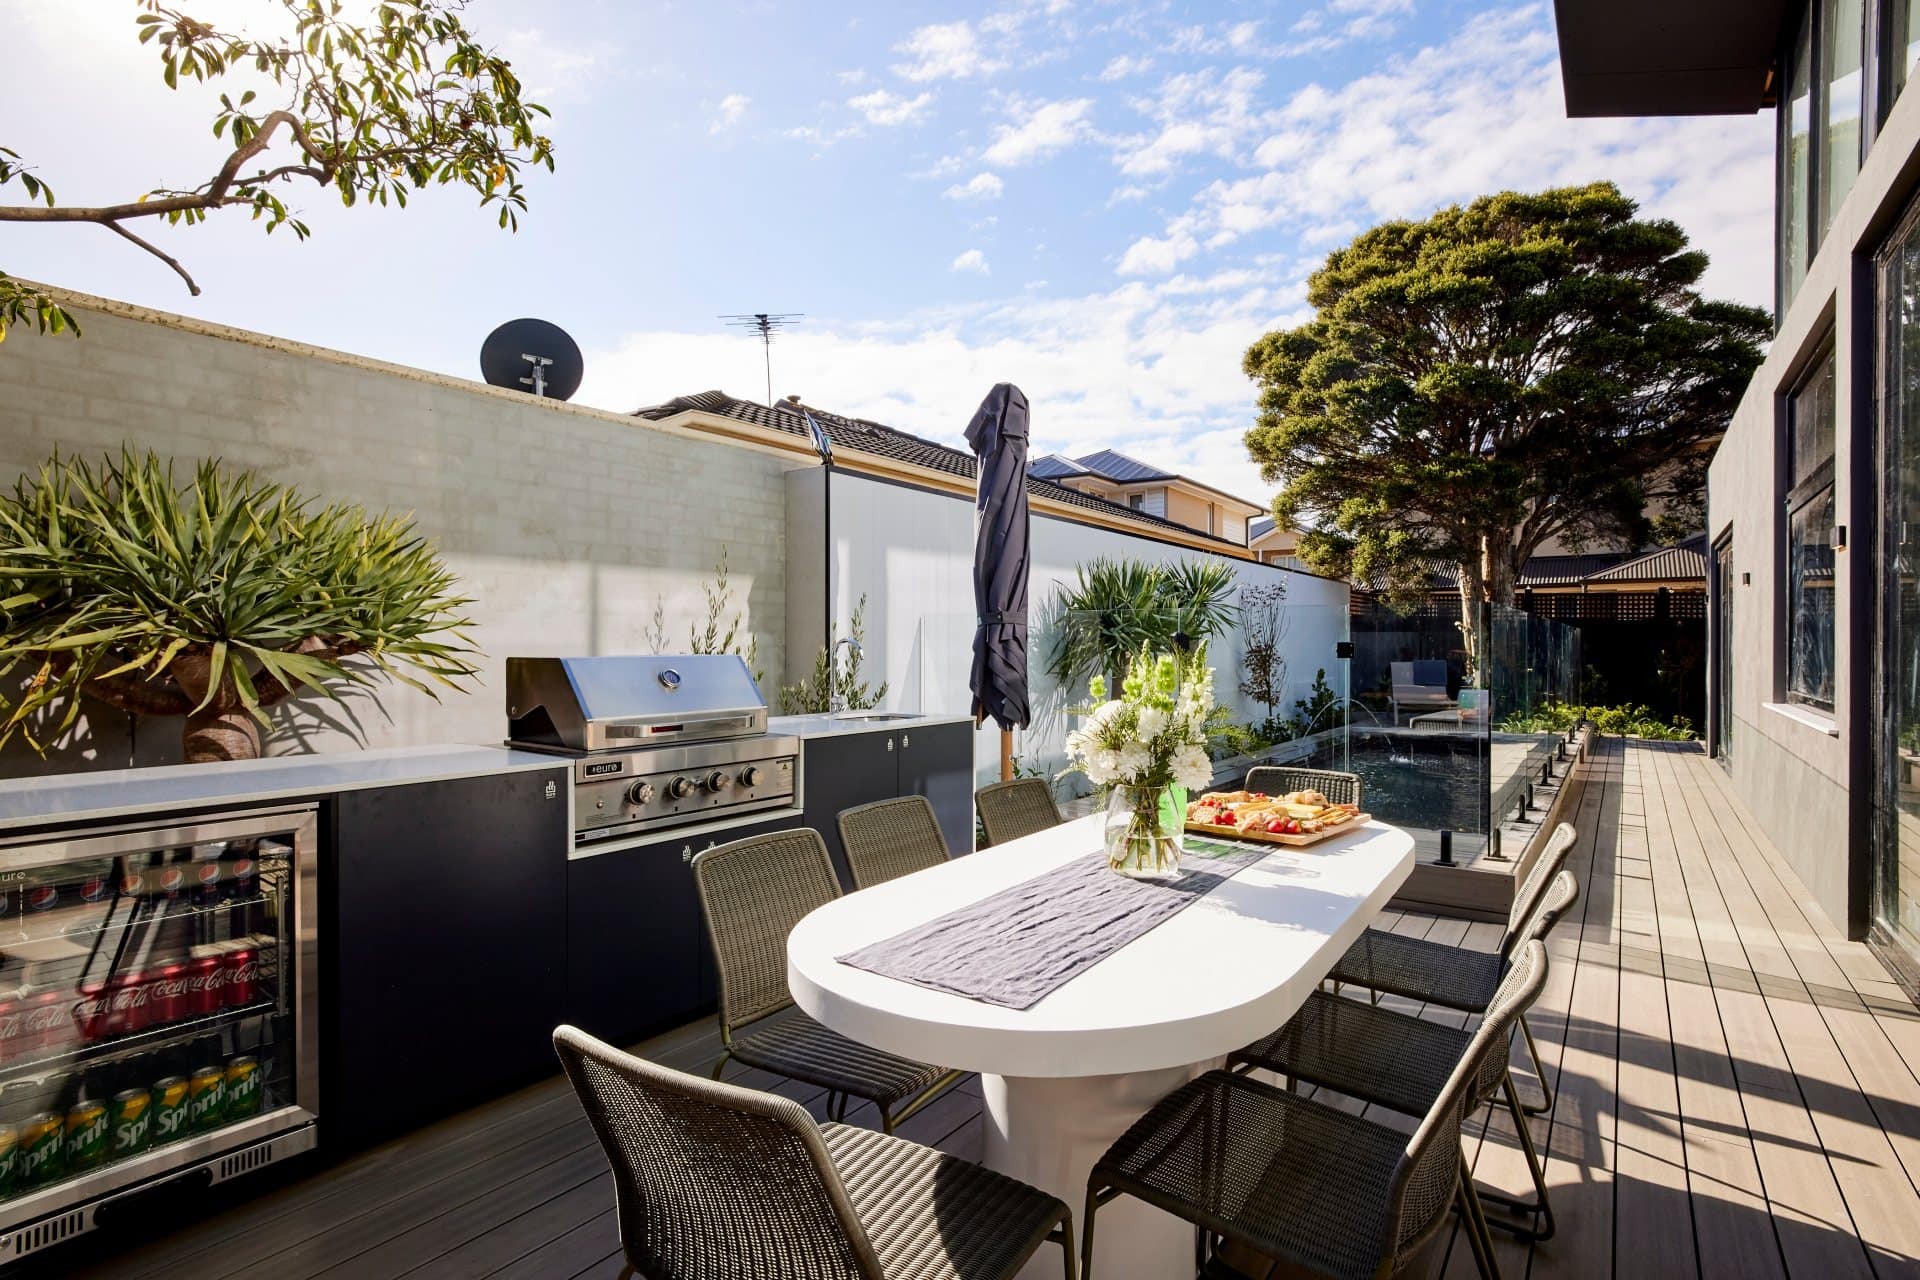 the block 2021 josh and luke backyard bbq zone with outdoor dining setting